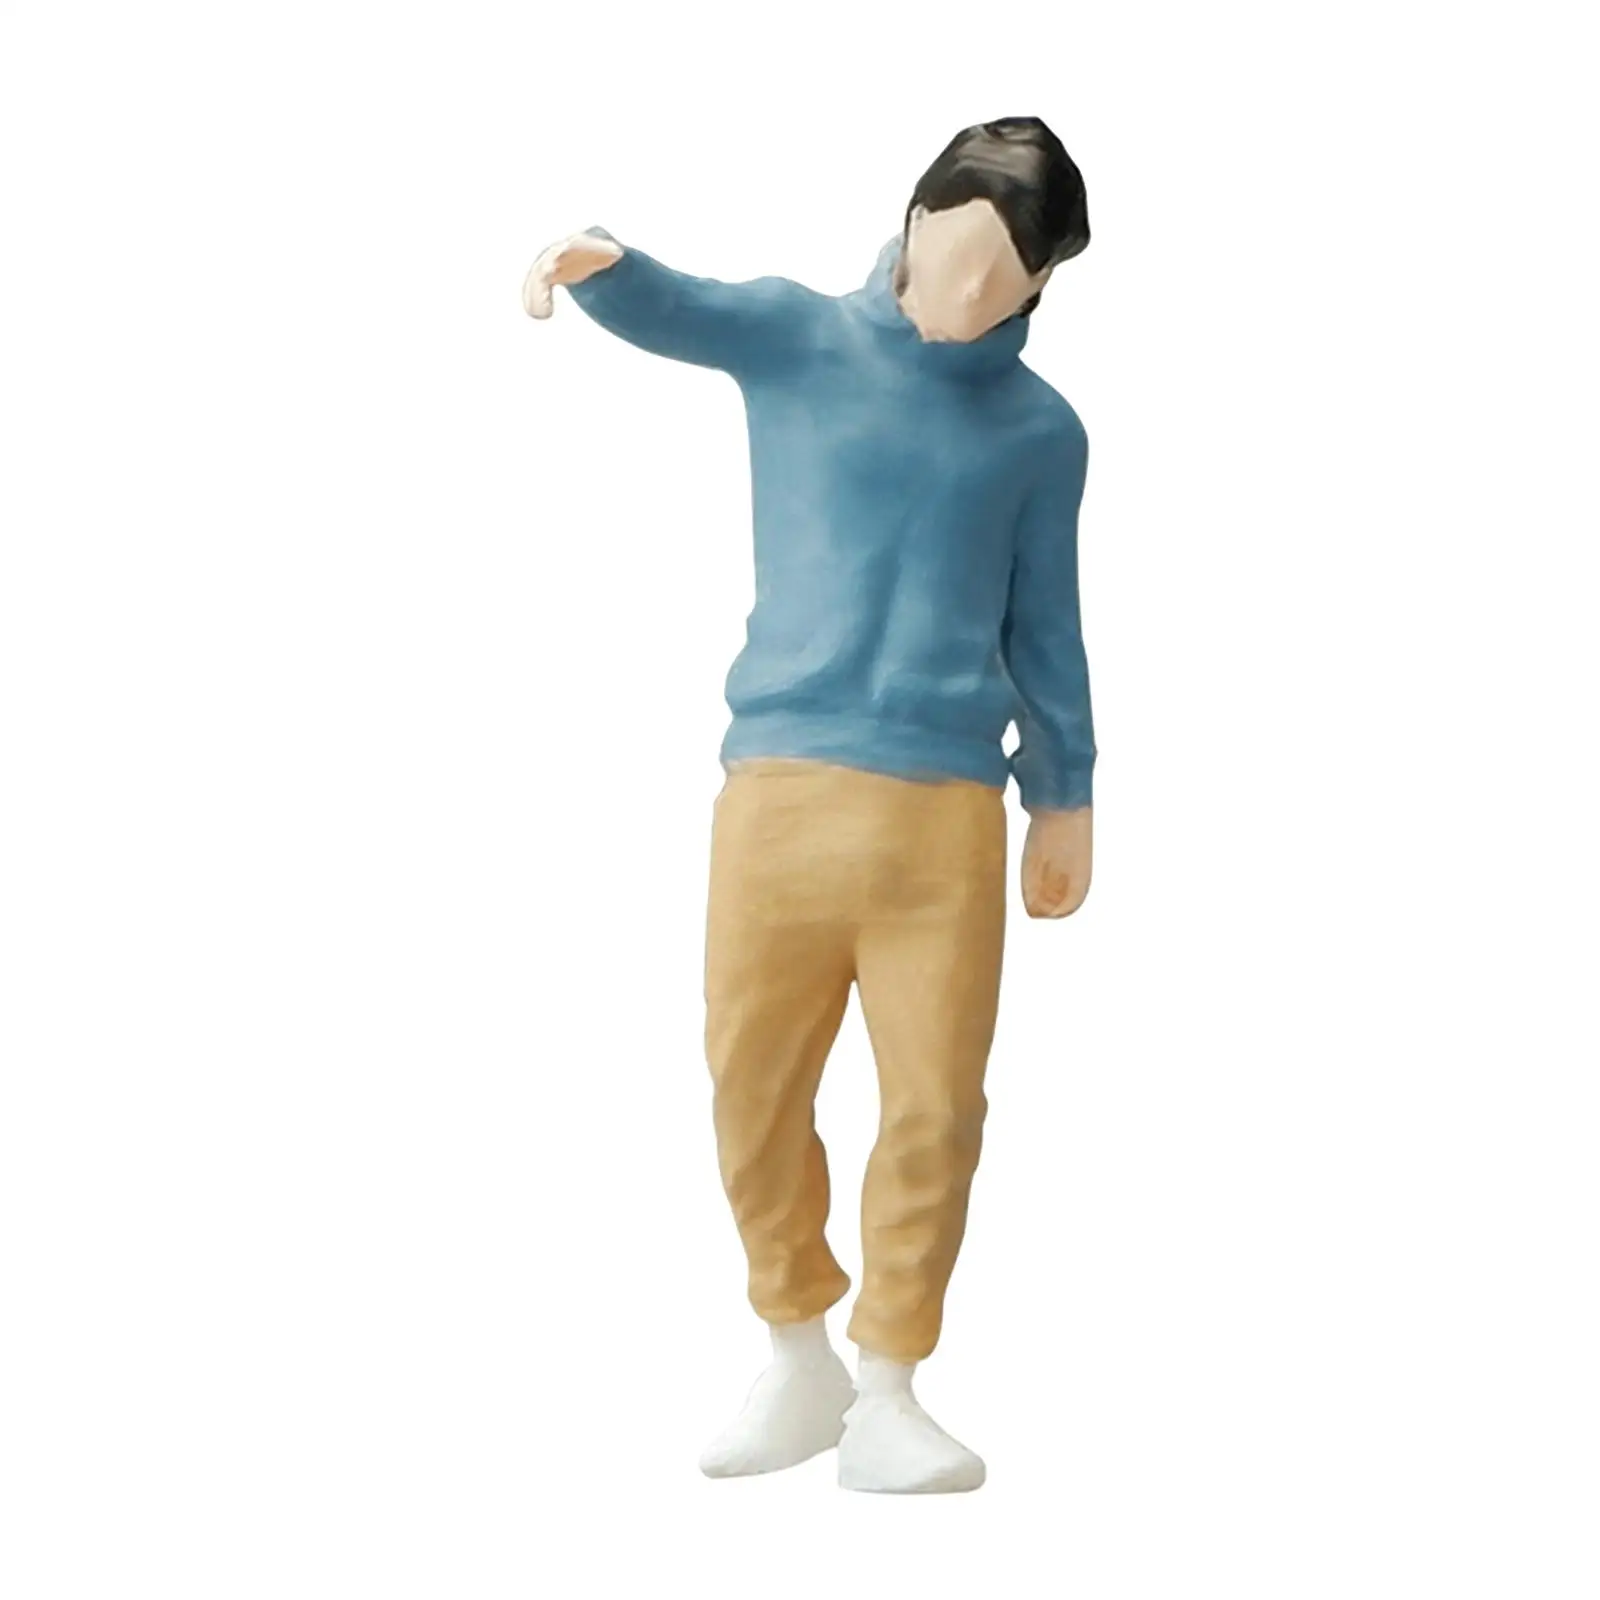 1:64 Realistic Diorama Character Figure Miniature Boys Figurines for Miniature Scene Diorama Dollhouse Photography Props Decor